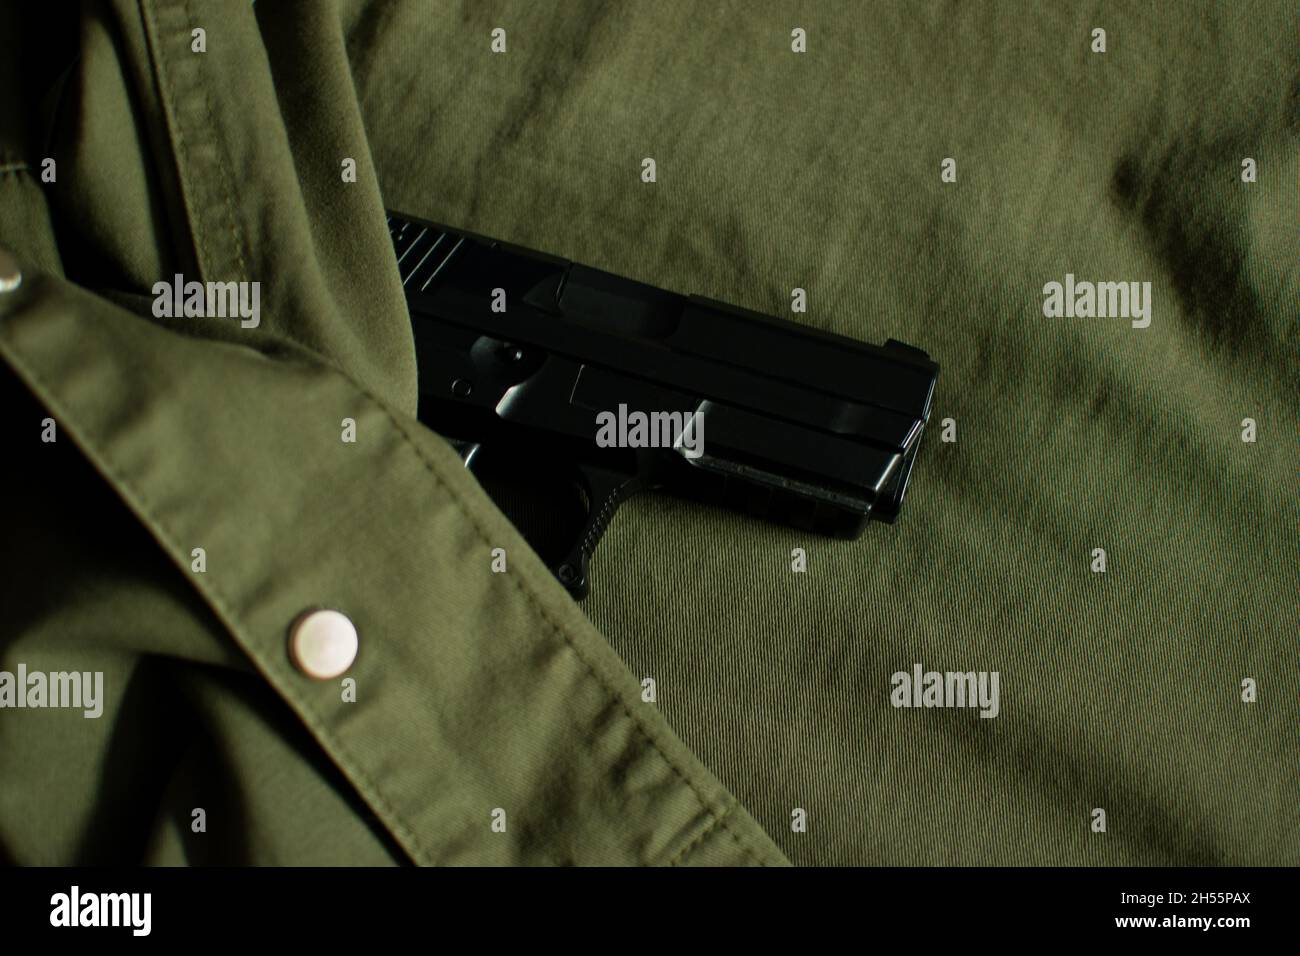 Black handgun, pistol hidden under vintage olive green military uniform Stock Photo